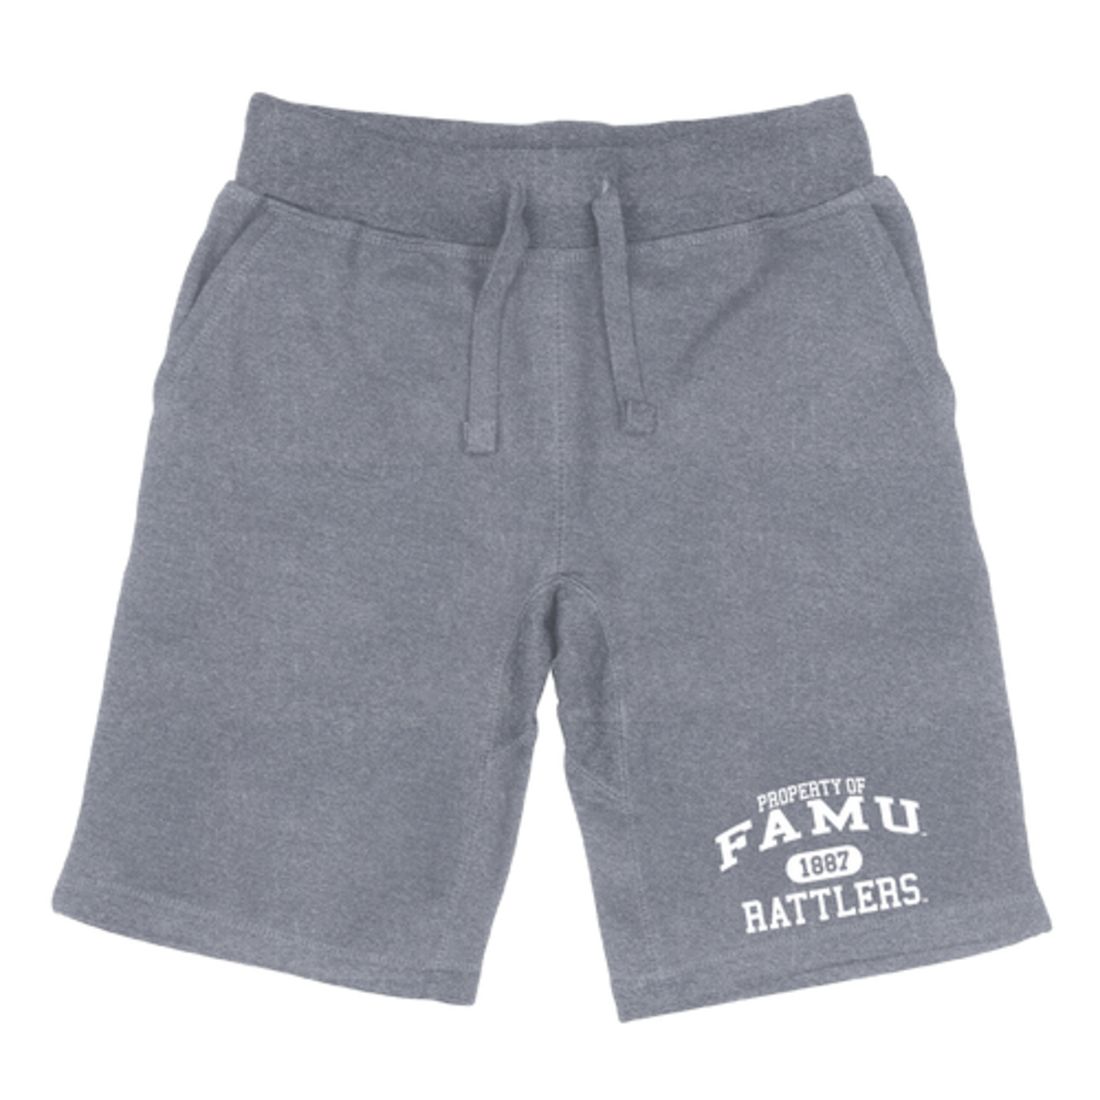 FAMU Florida A&M University Rattlers Property Fleece Drawstring Shorts-Campus-Wardrobe